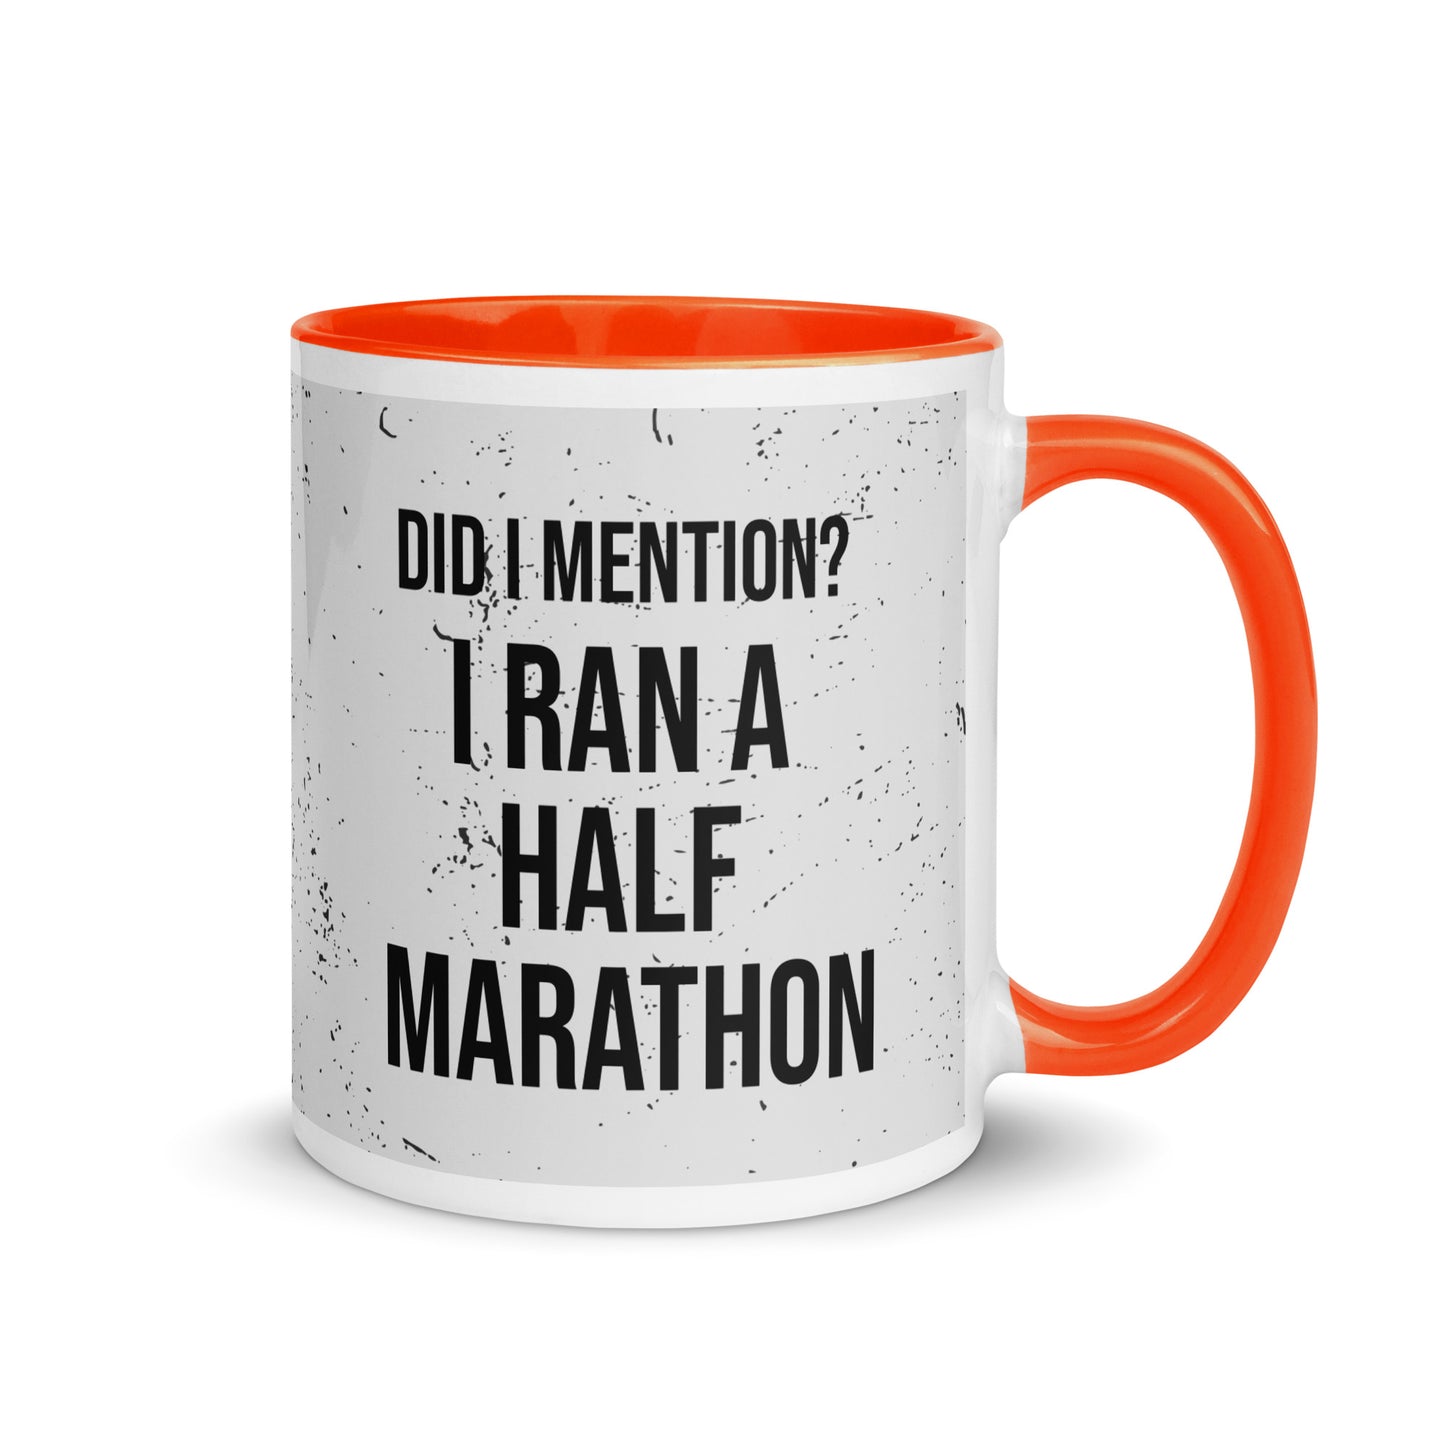 orange handled mug with the words did I mention? I ran a half marathon in a bold font across a splatter effect background